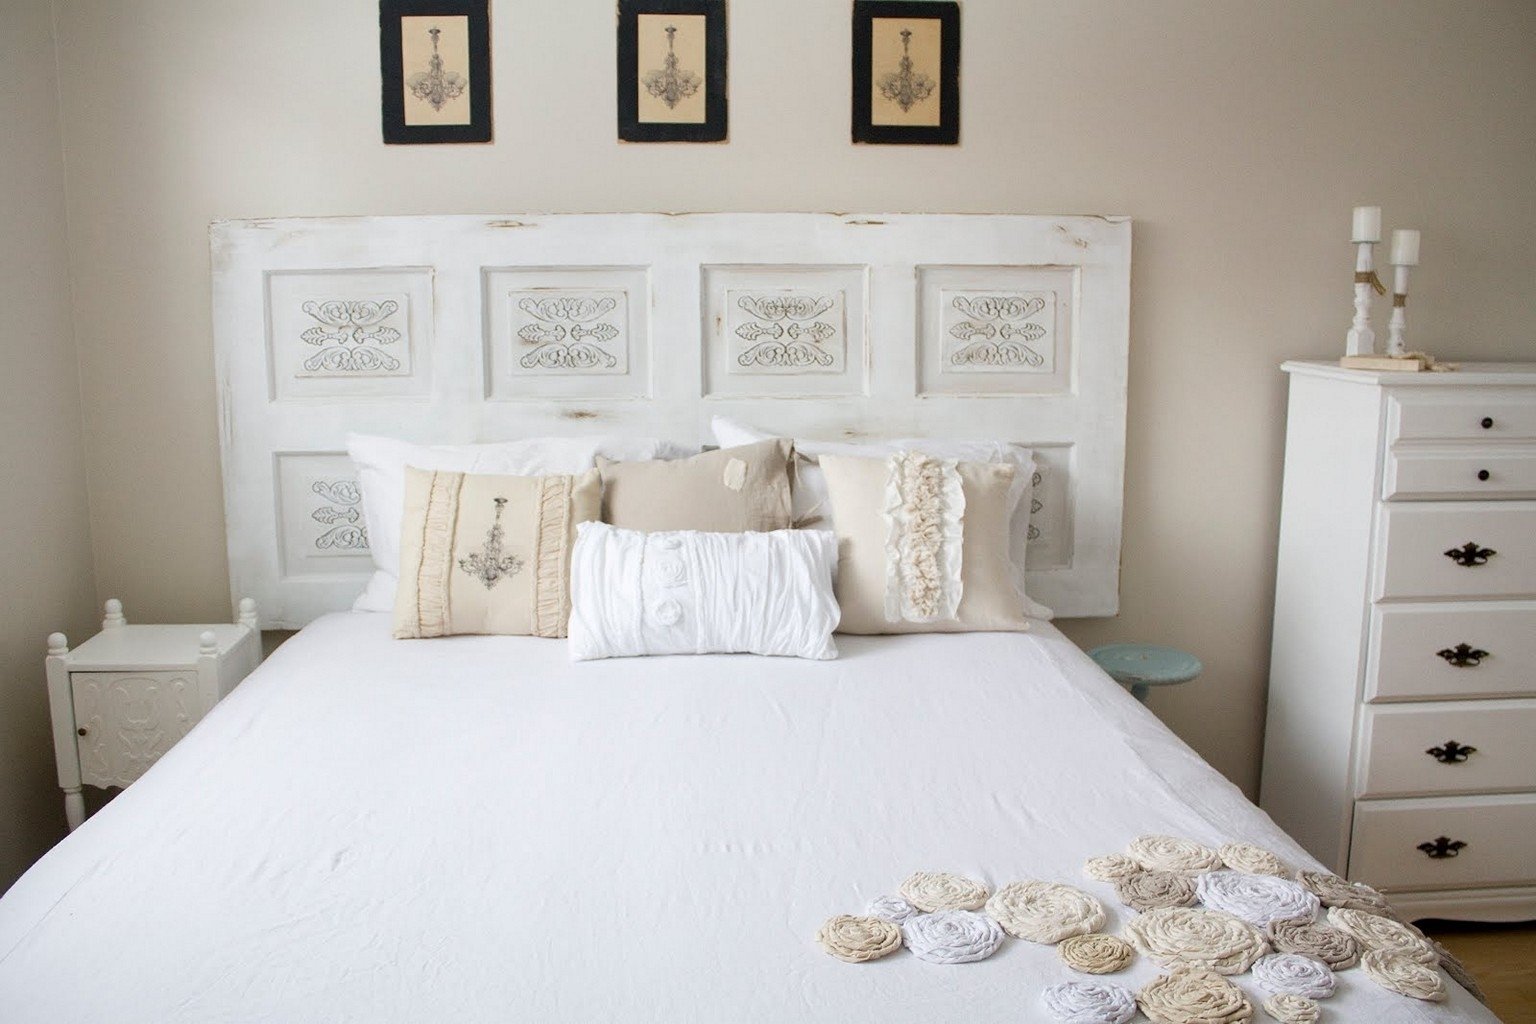 10 Amazing Diy Headboard Ideas For King Beds diy headboard ideas for king beds pictures homestylediary 1 2022